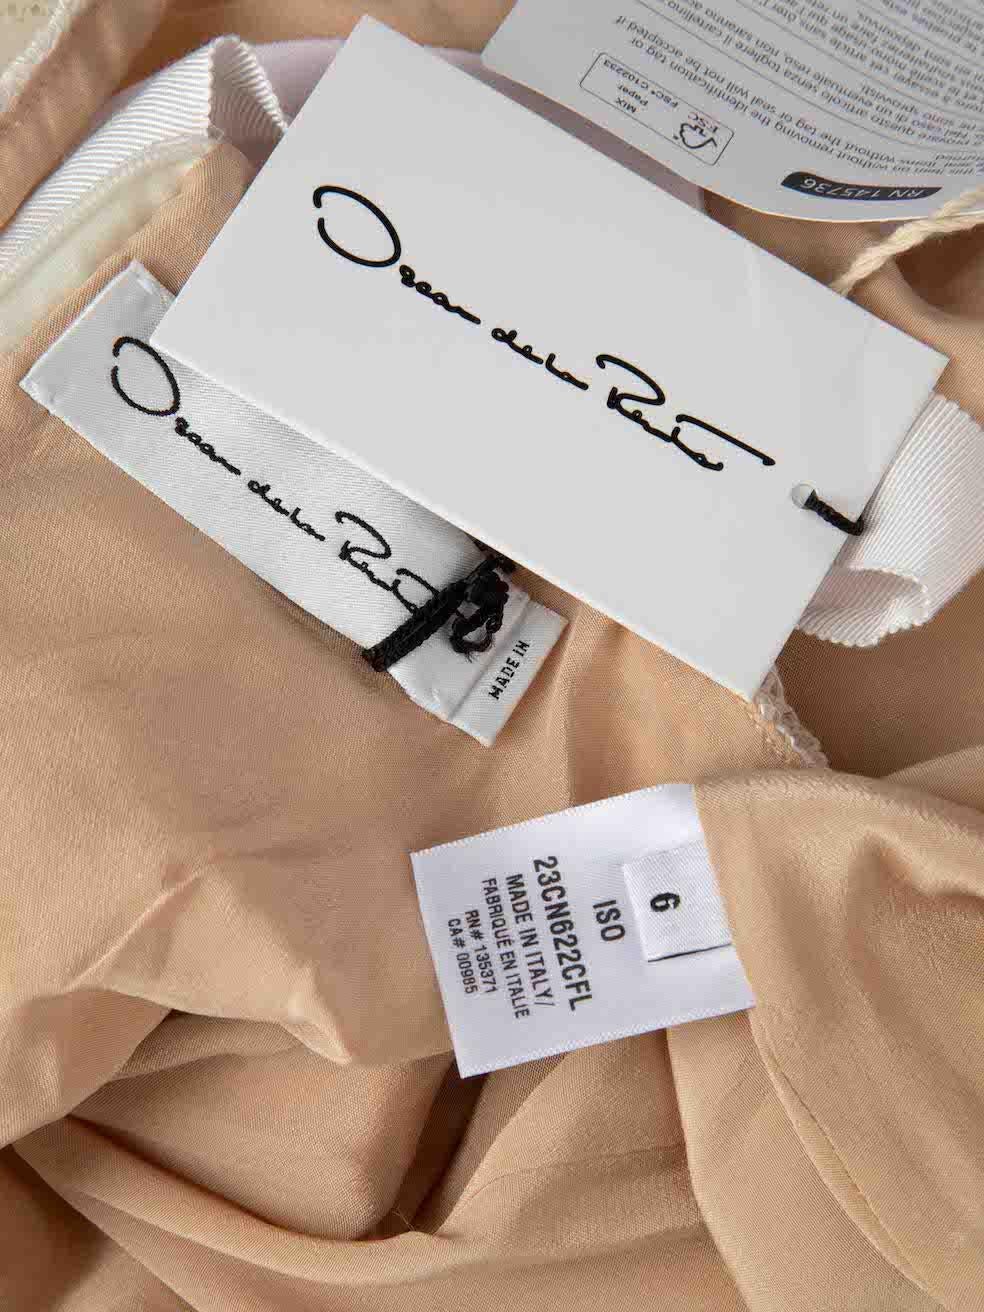 Oscar de la Renta White Floral Lace Sleeveless Dress Size M For Sale 1